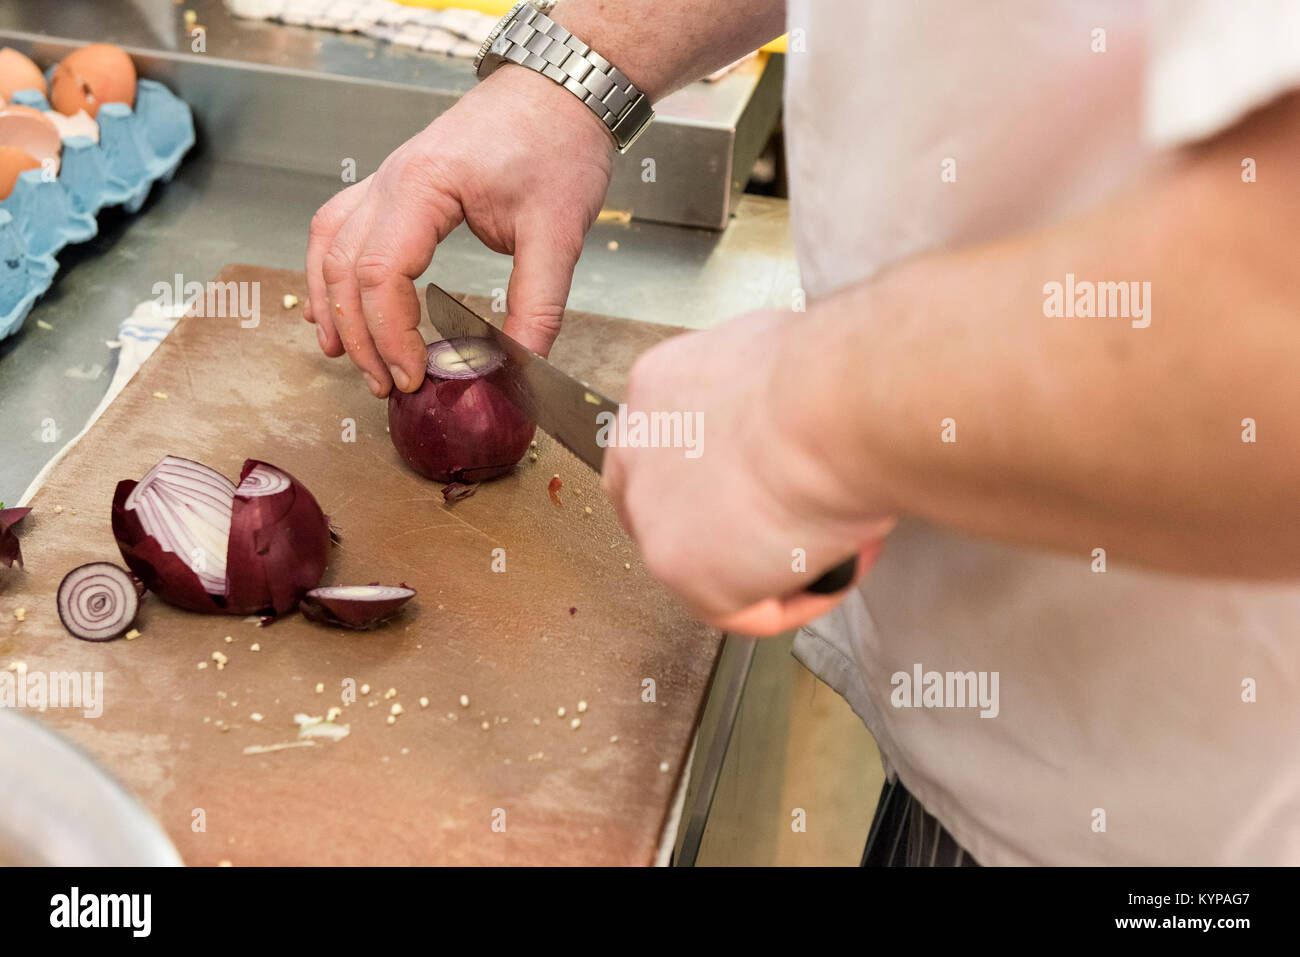 Food preparation - a chef preparing food in a restaurant kitchen. Stock Photo